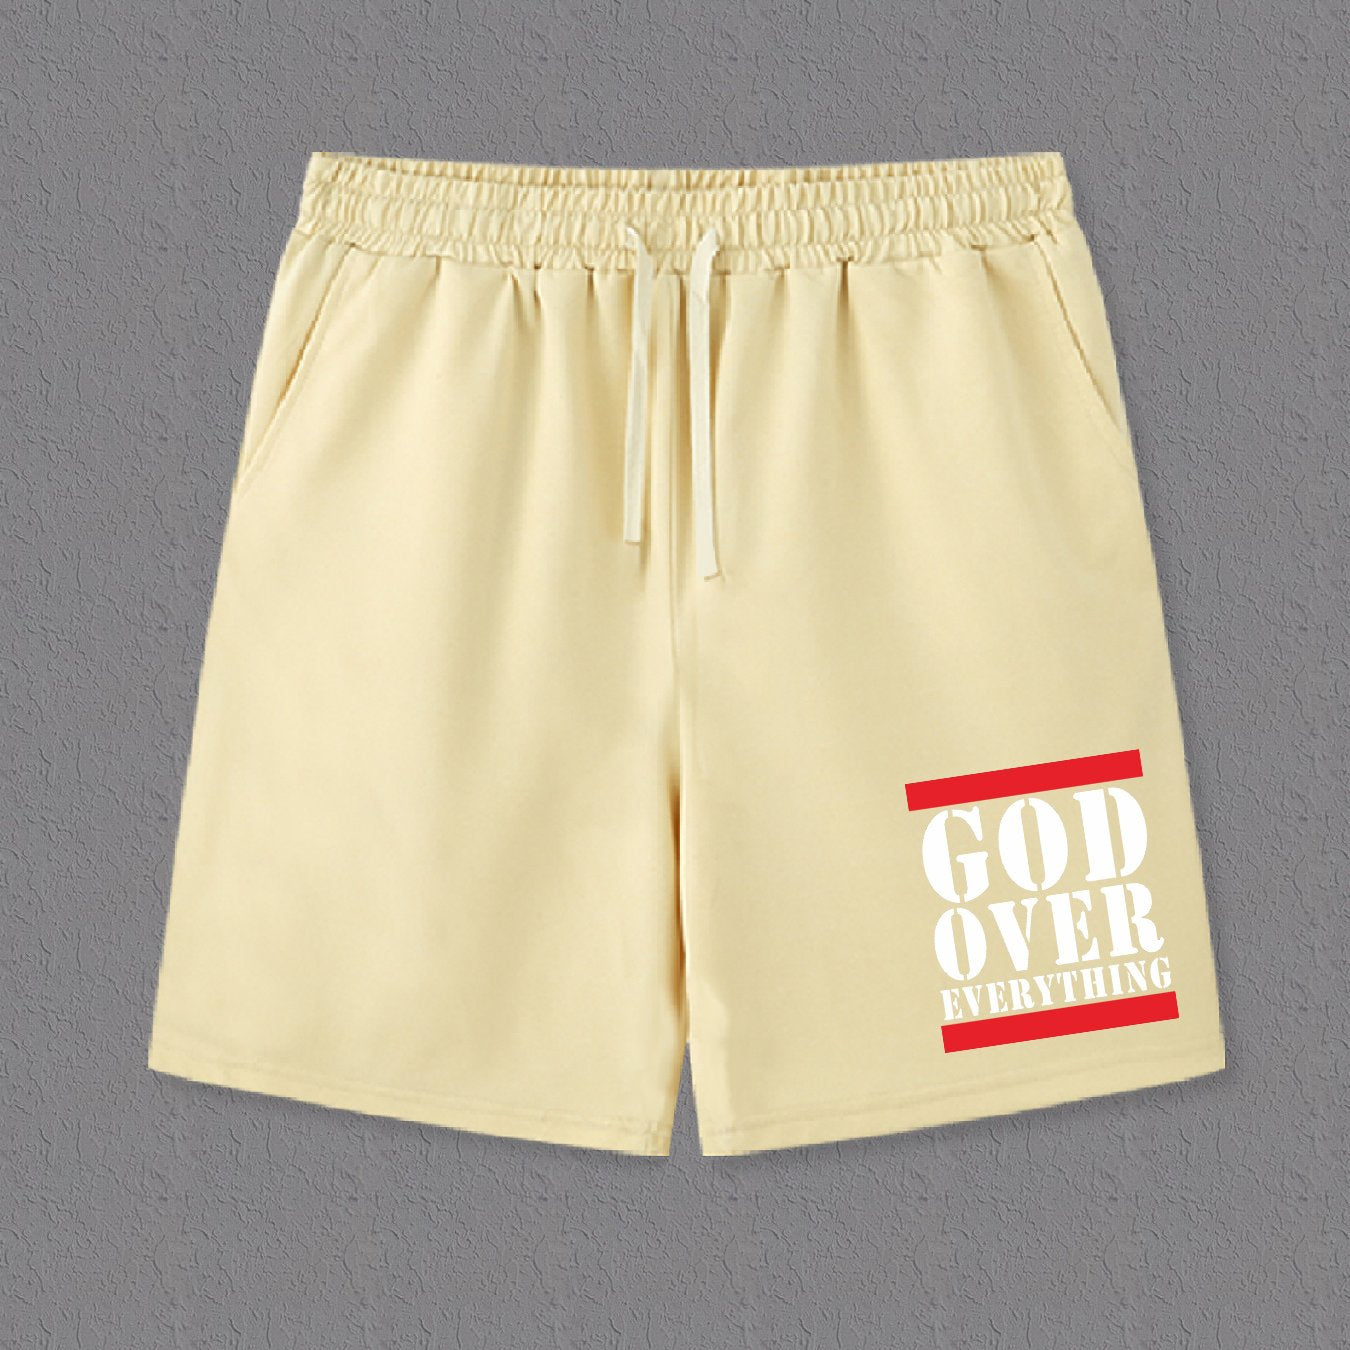 God Over Everything Men's Christian Shorts claimedbygoddesigns